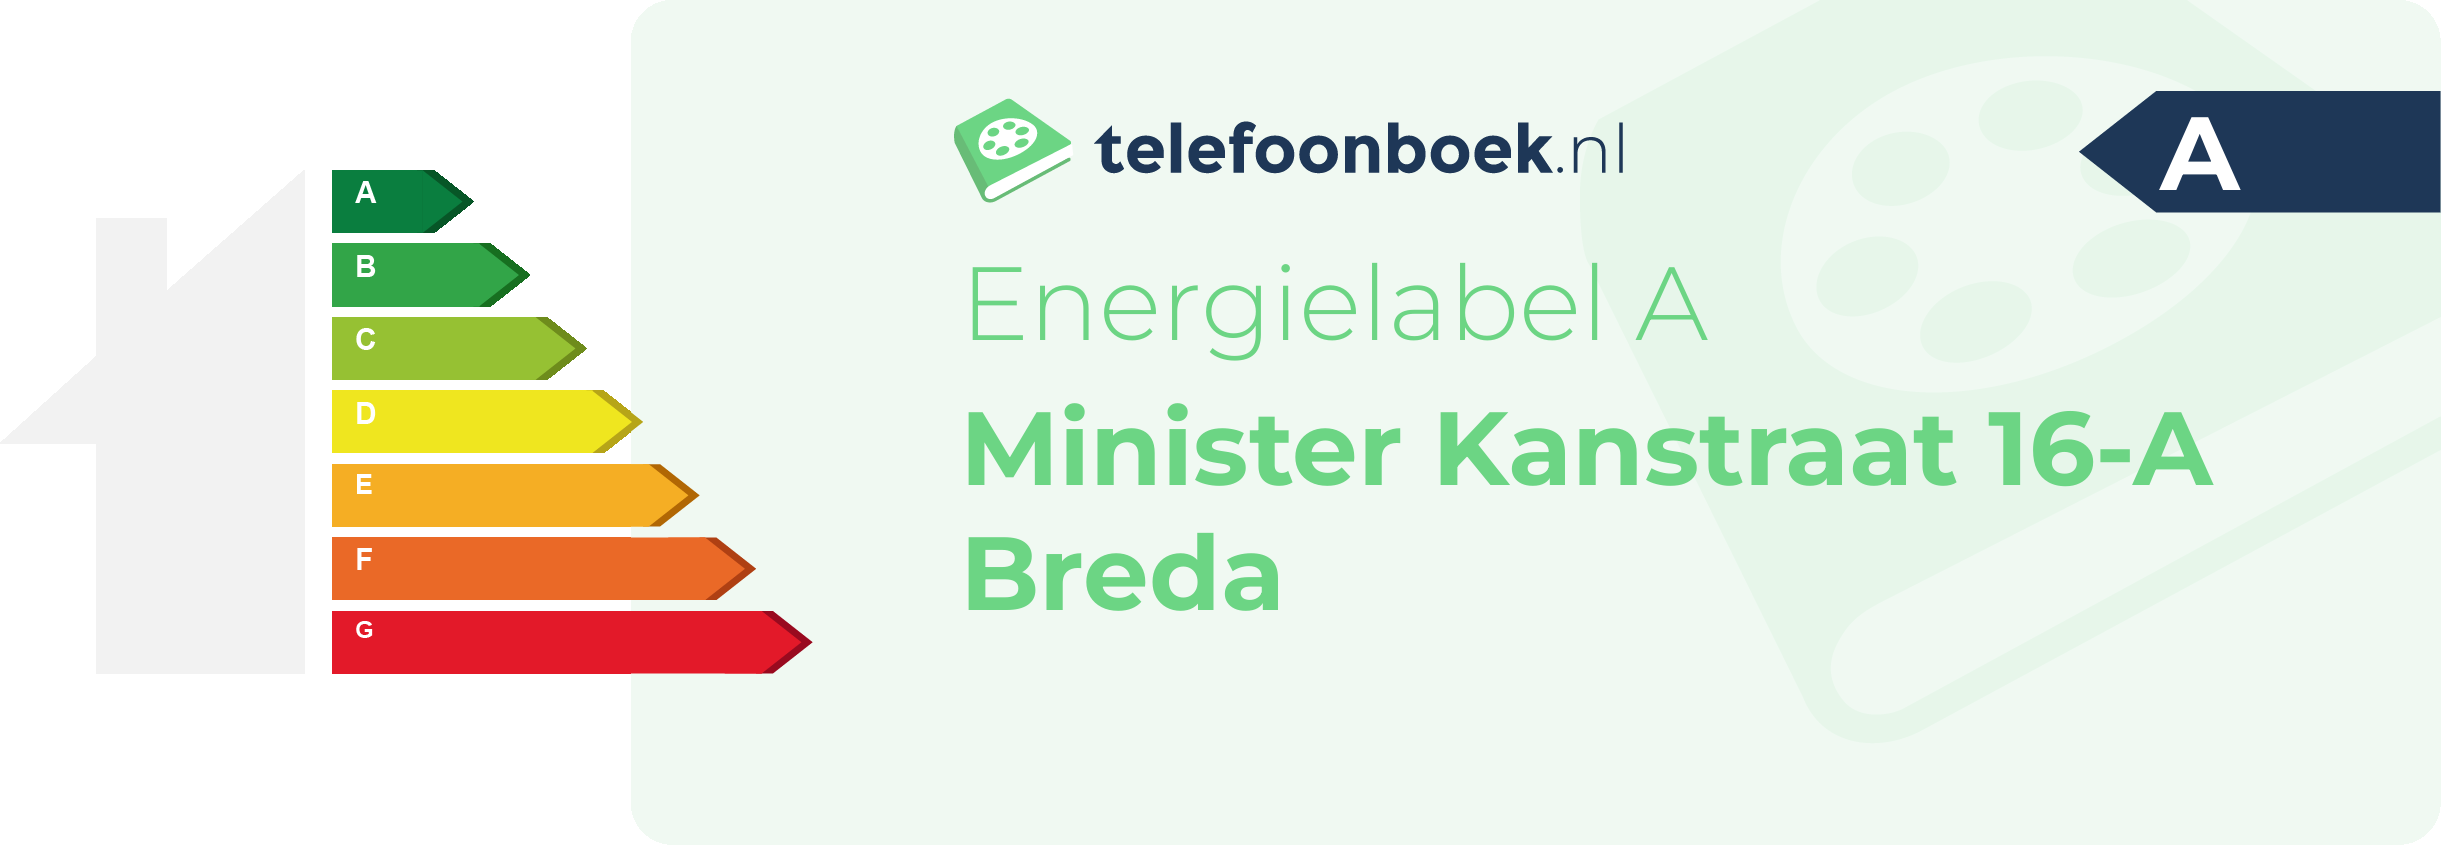 Energielabel Minister Kanstraat 16-A Breda